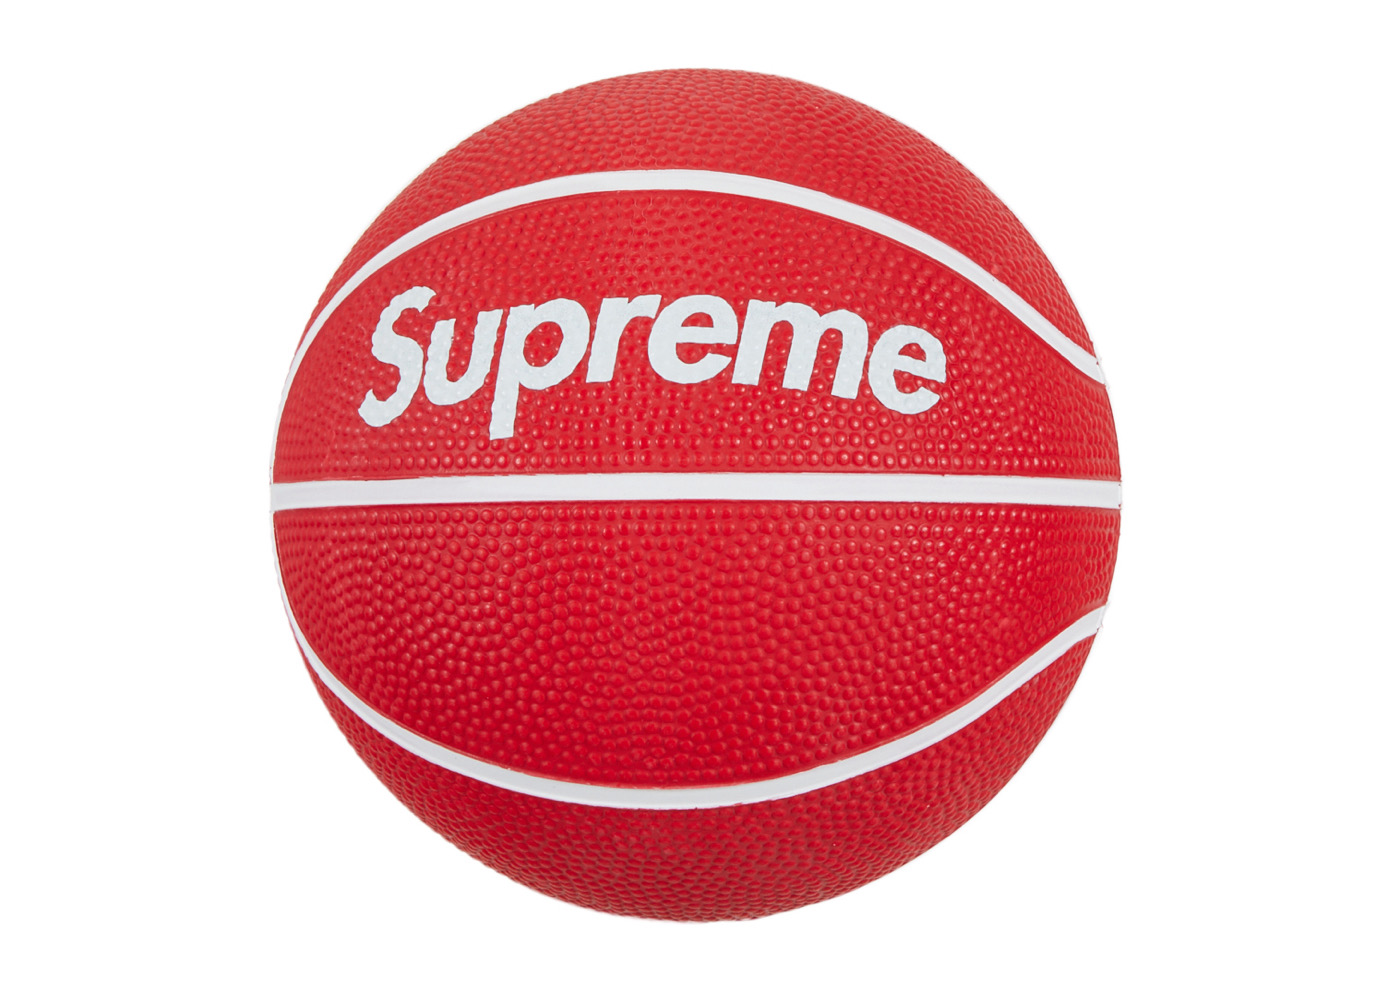 Supreme Spalding Mini Basketball Hop 赤2万円に値下げは可能でしょうか